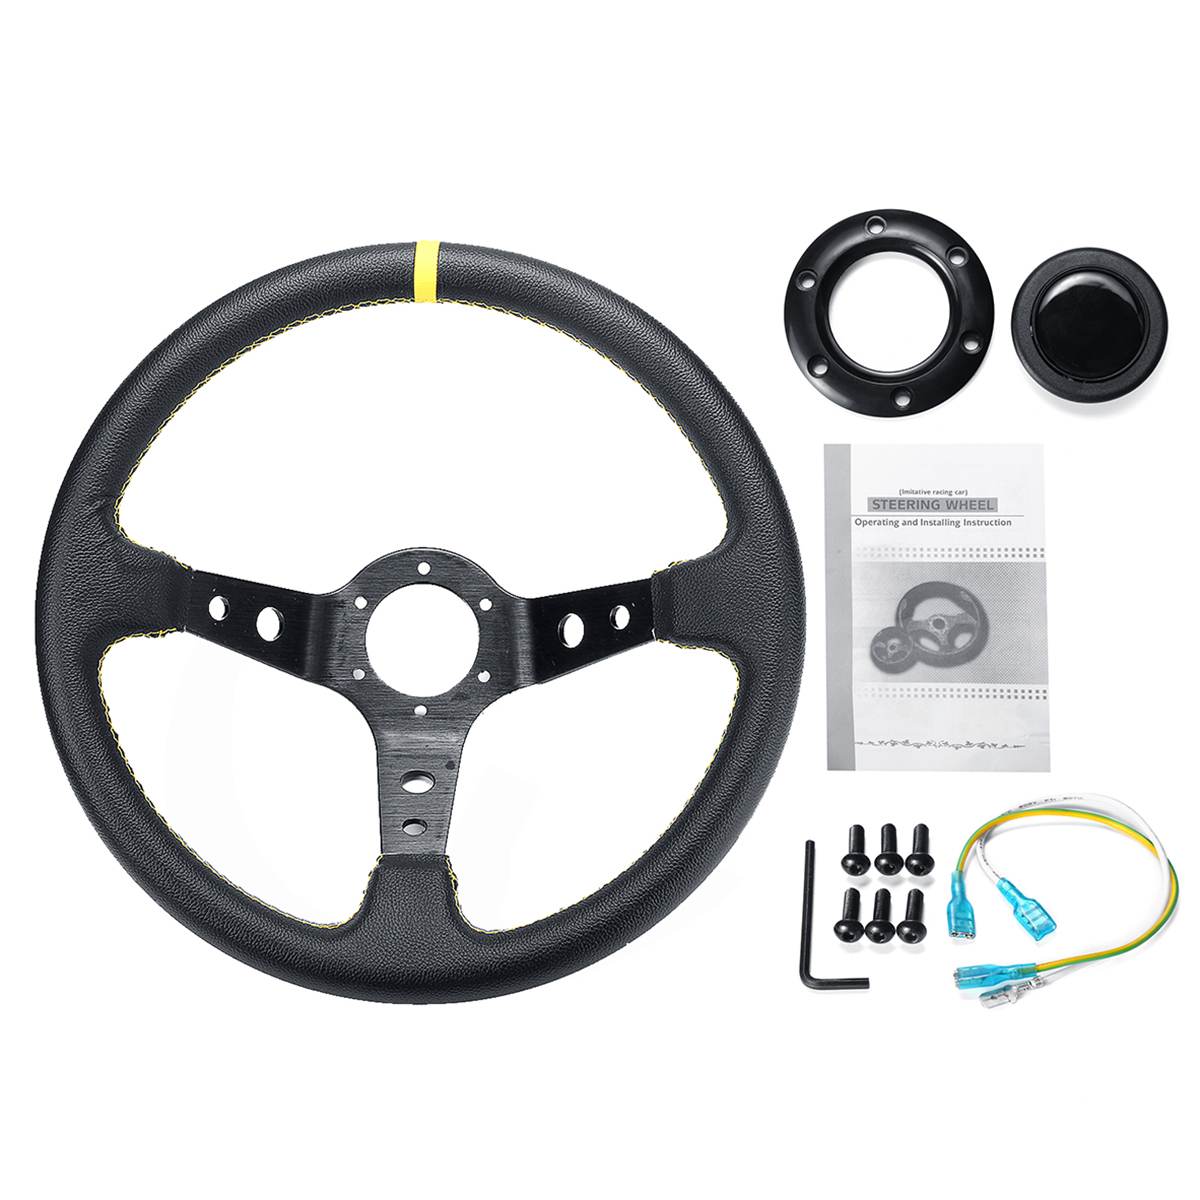 14inch 350mm Universal Car Racing Steering Wheel Auto Racing Sport Steering Wheel Accessories for BMW Akura etc.